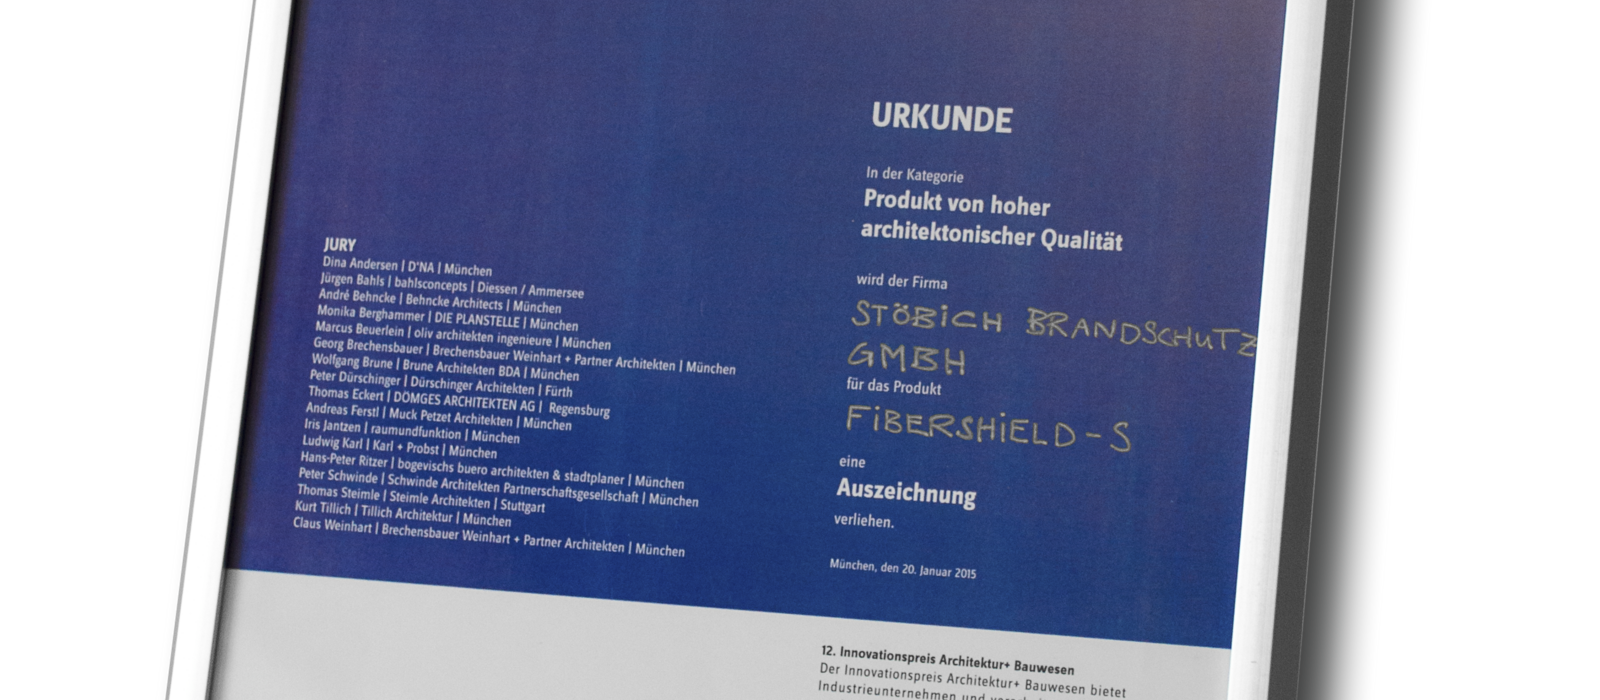 Stöbich-brandscherm voor German Design Award genomineerd